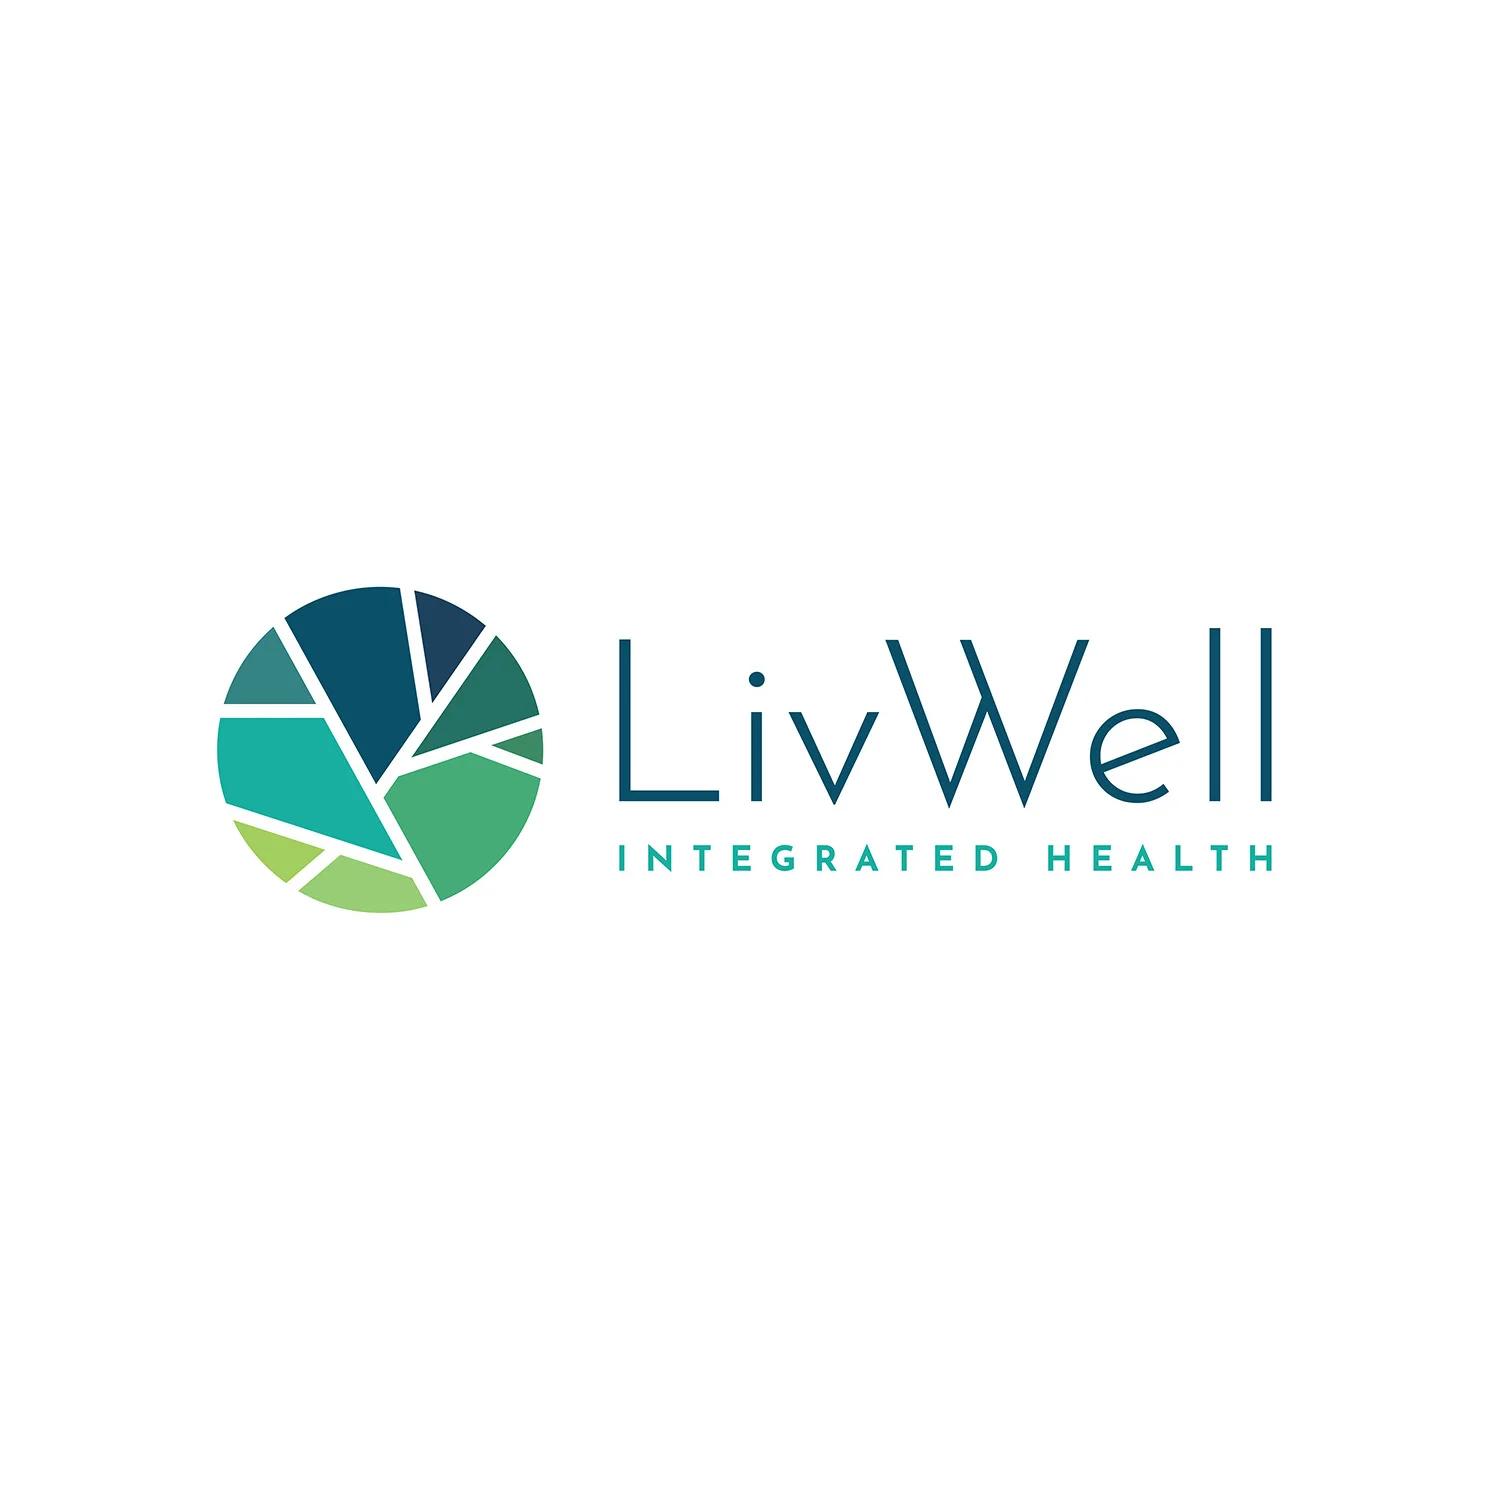 lindsay-mcghee-designs-LivWell-squamish-logo-horz-1200x1200